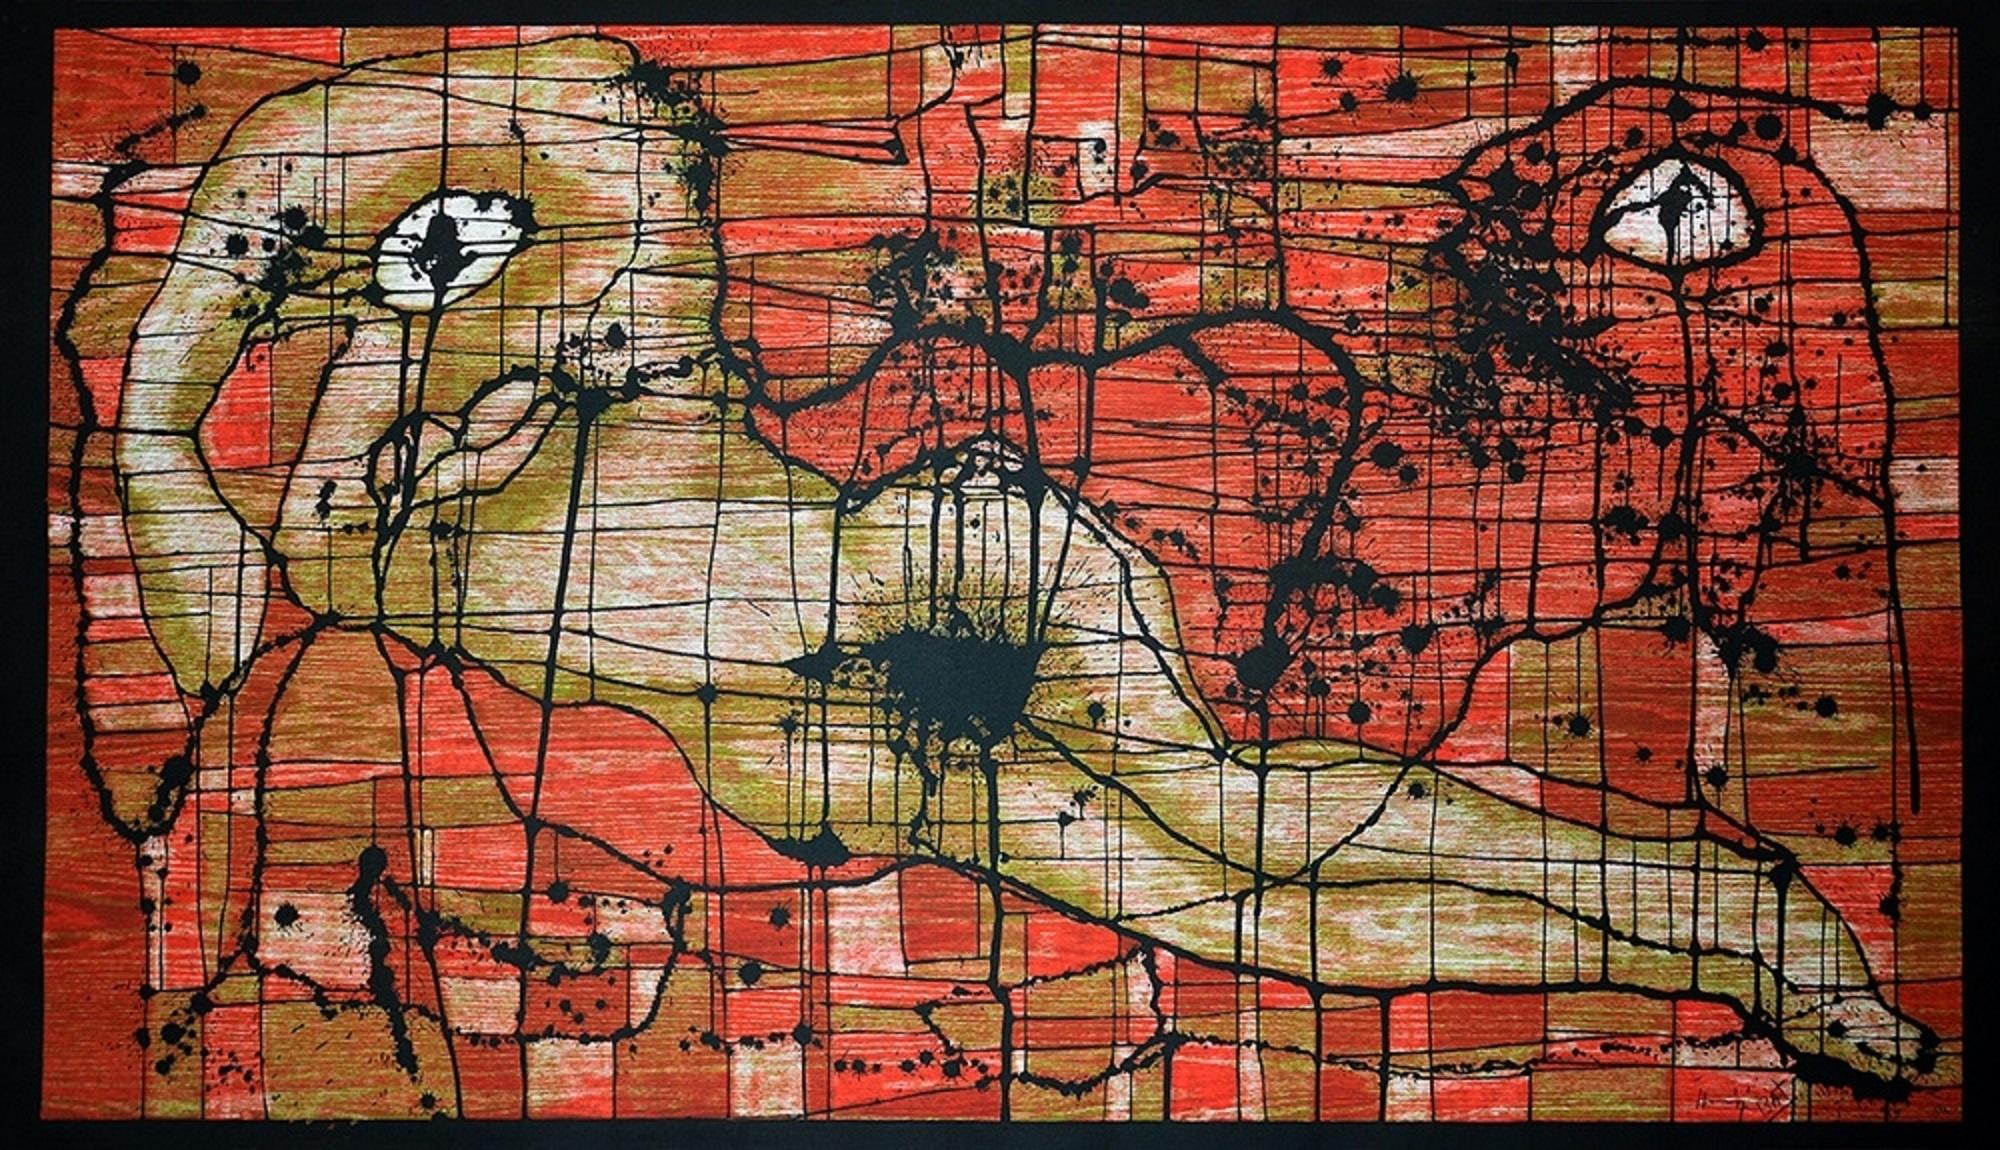 Sergio Hernández Nude Print - Sergio Hernandez, "La Maja", 2017, Woodcut 87x42in